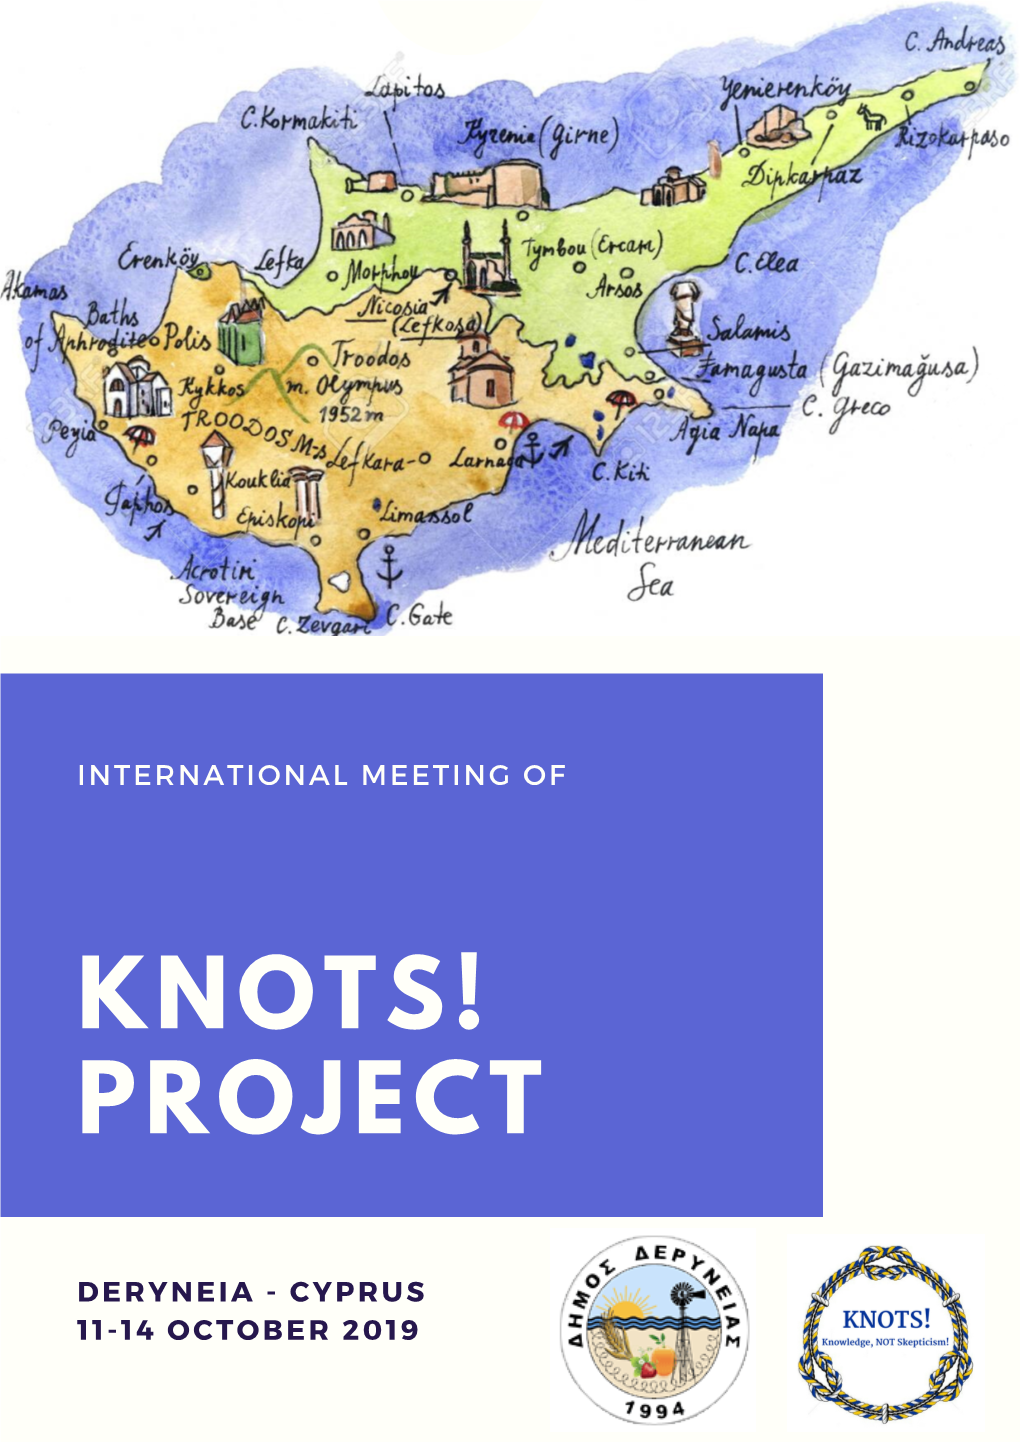 Knots! Project